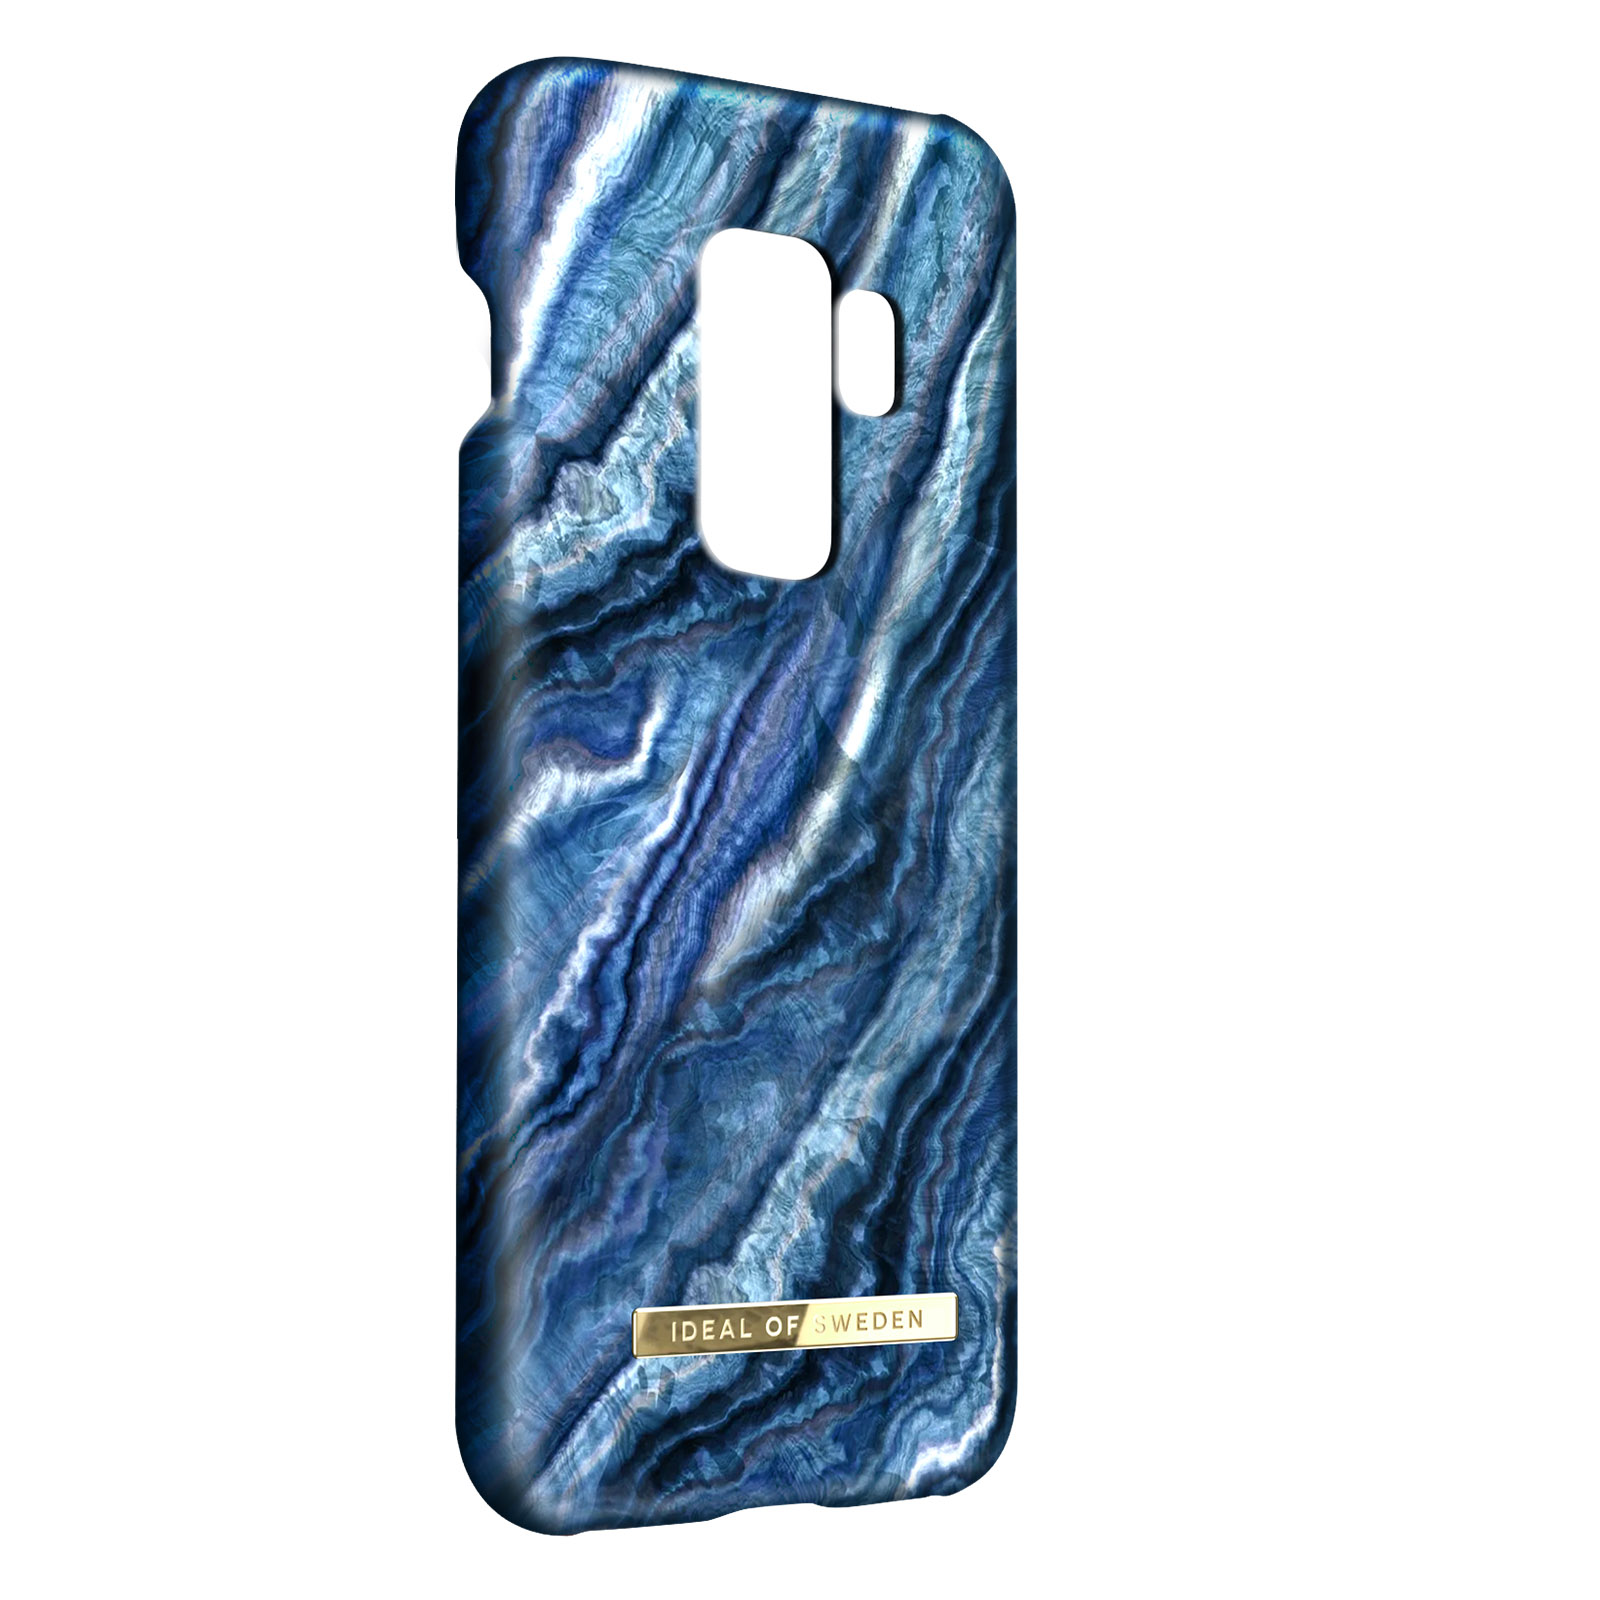 OF Samsung, Backcover, Series, S9, Galaxy SWEDEN Swirl Blau IDEAL Indigo